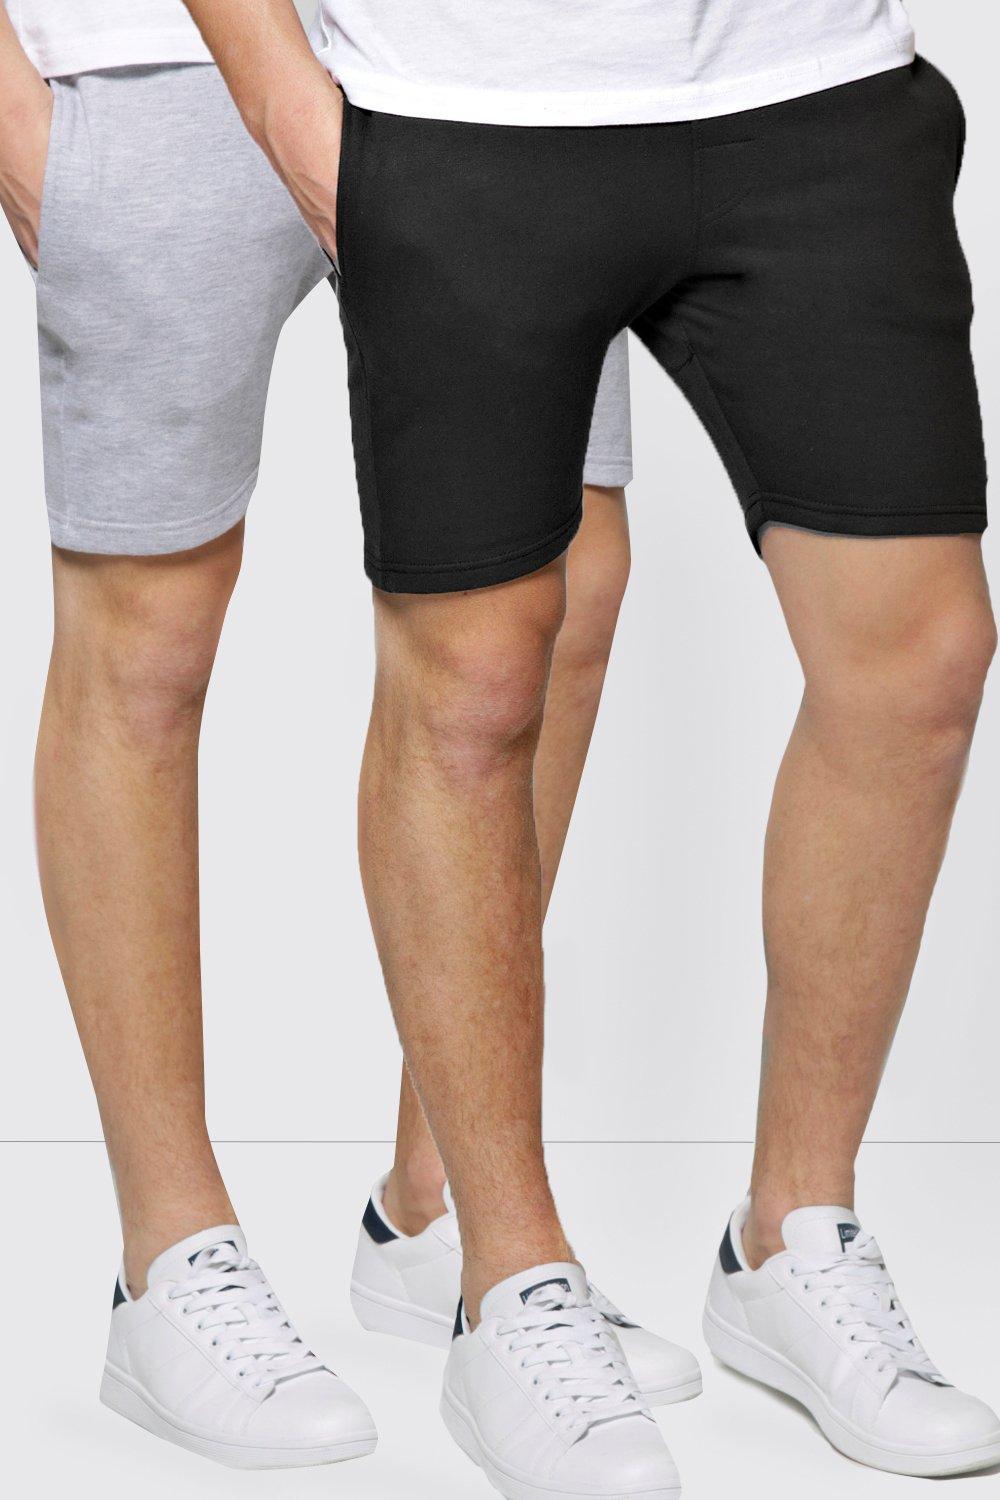 mens skinny jersey shorts